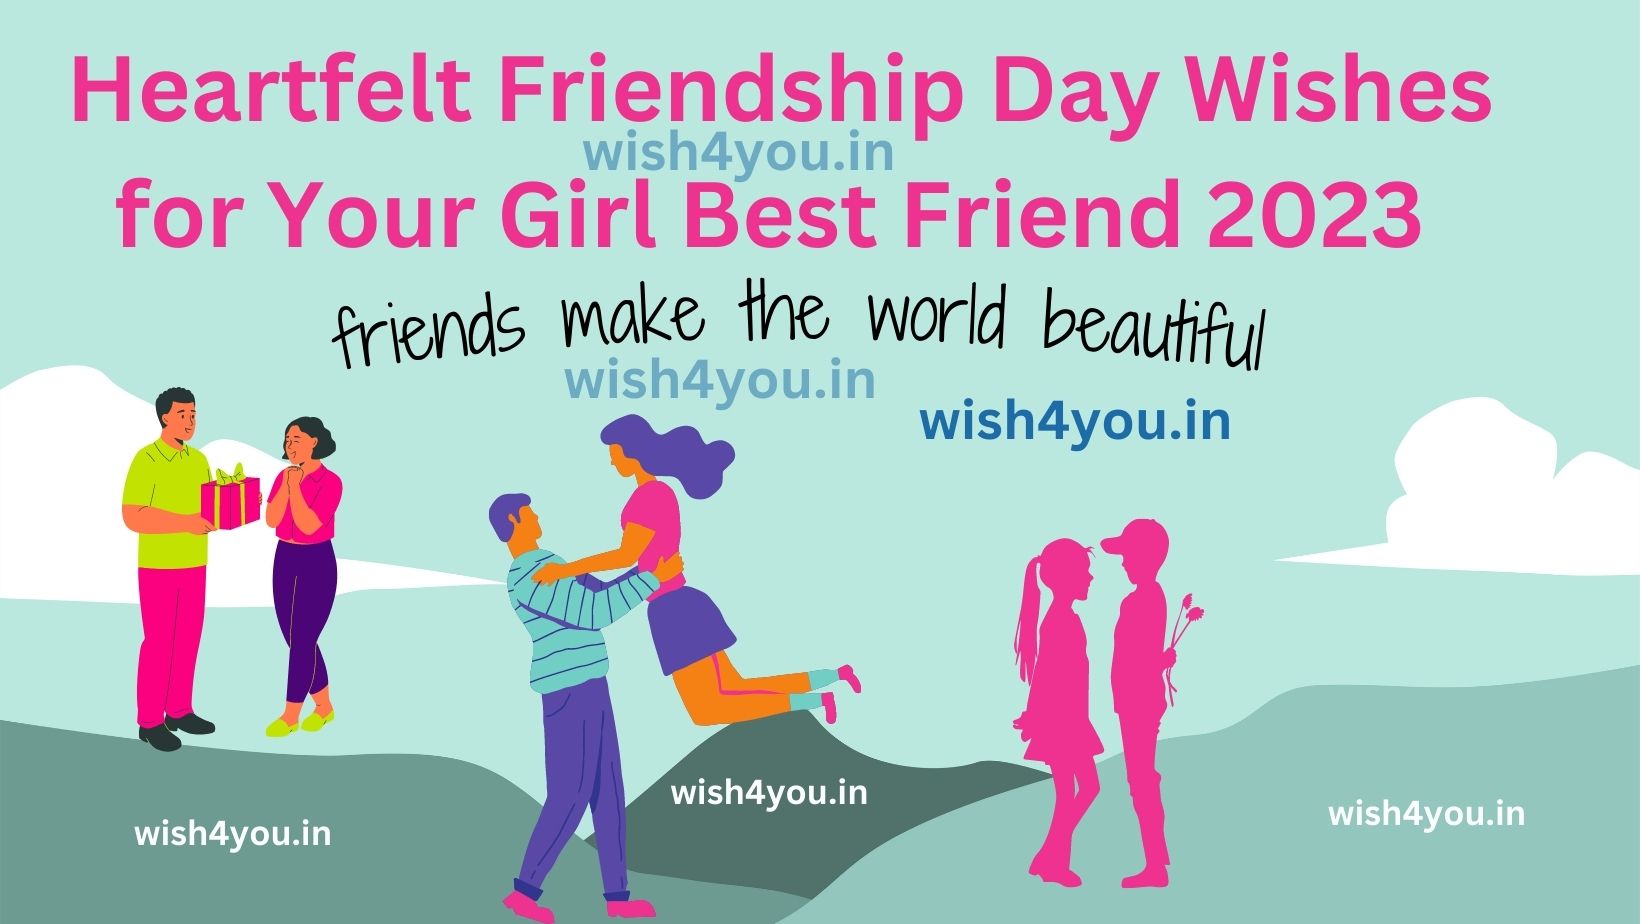 Heartfelt Friendship Day Wishes for Your Girl Best Friend 2023